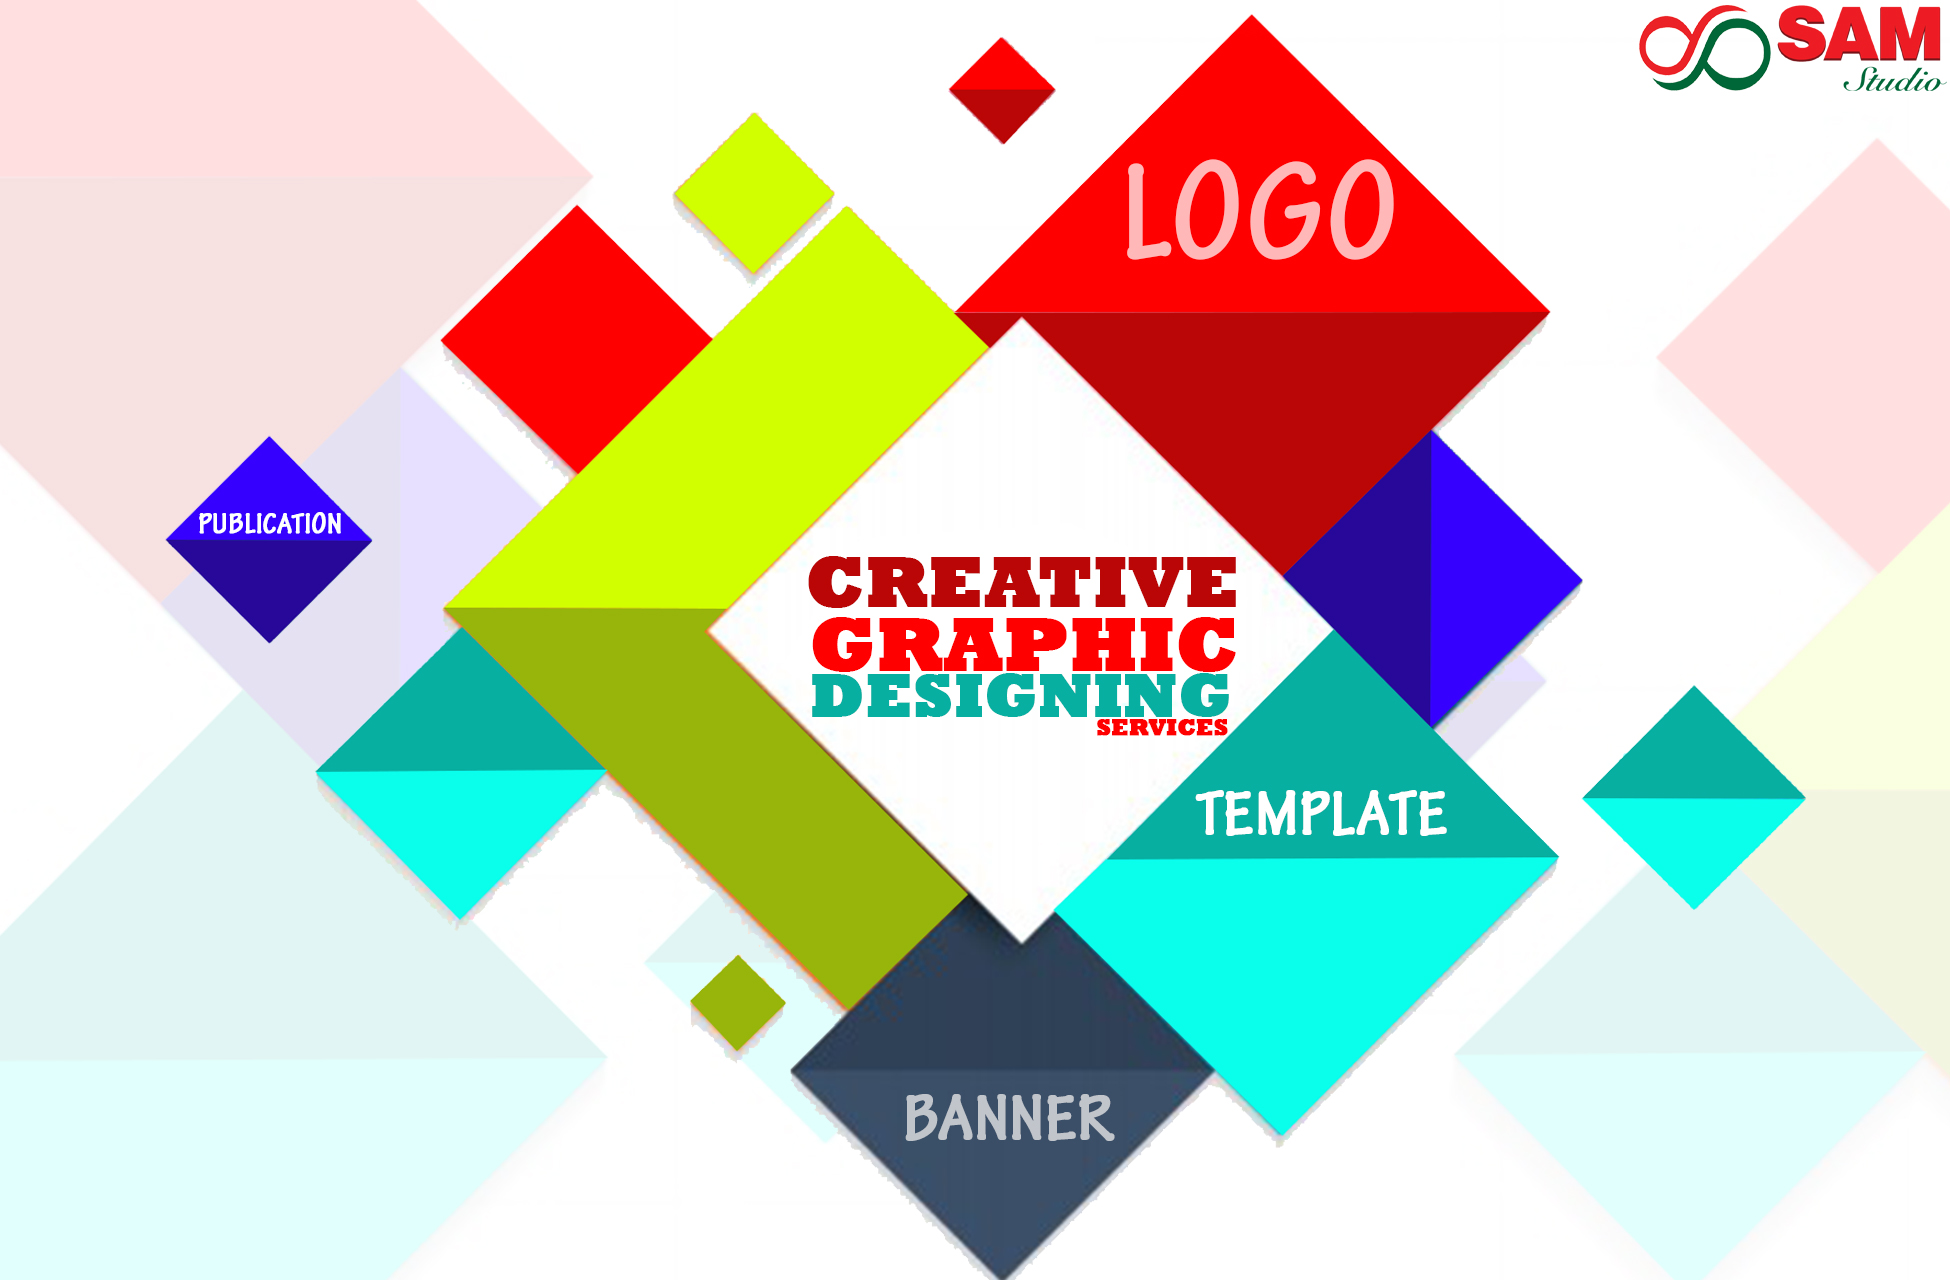 Graphic Designing | Logo, Banner, Template, Design Services